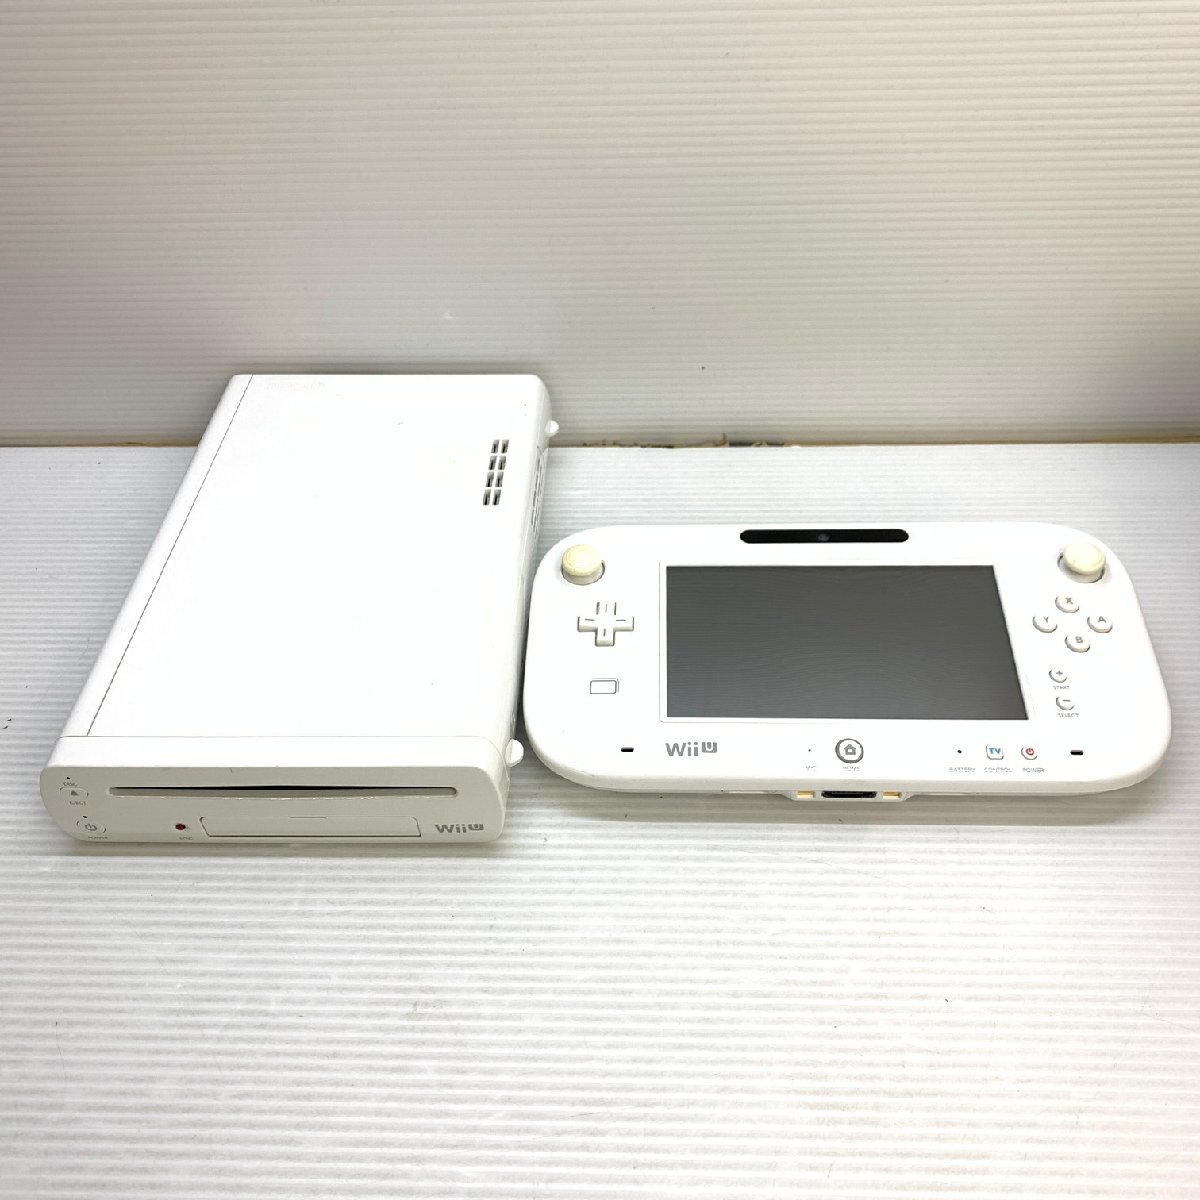 MIN【現状渡し品】 MSMG 任天堂 Nintendo Wii U マリオカート8セット 32GB shiro ゲーム機 マリカー 〈34-231120-SS-2-MIN〉_画像3